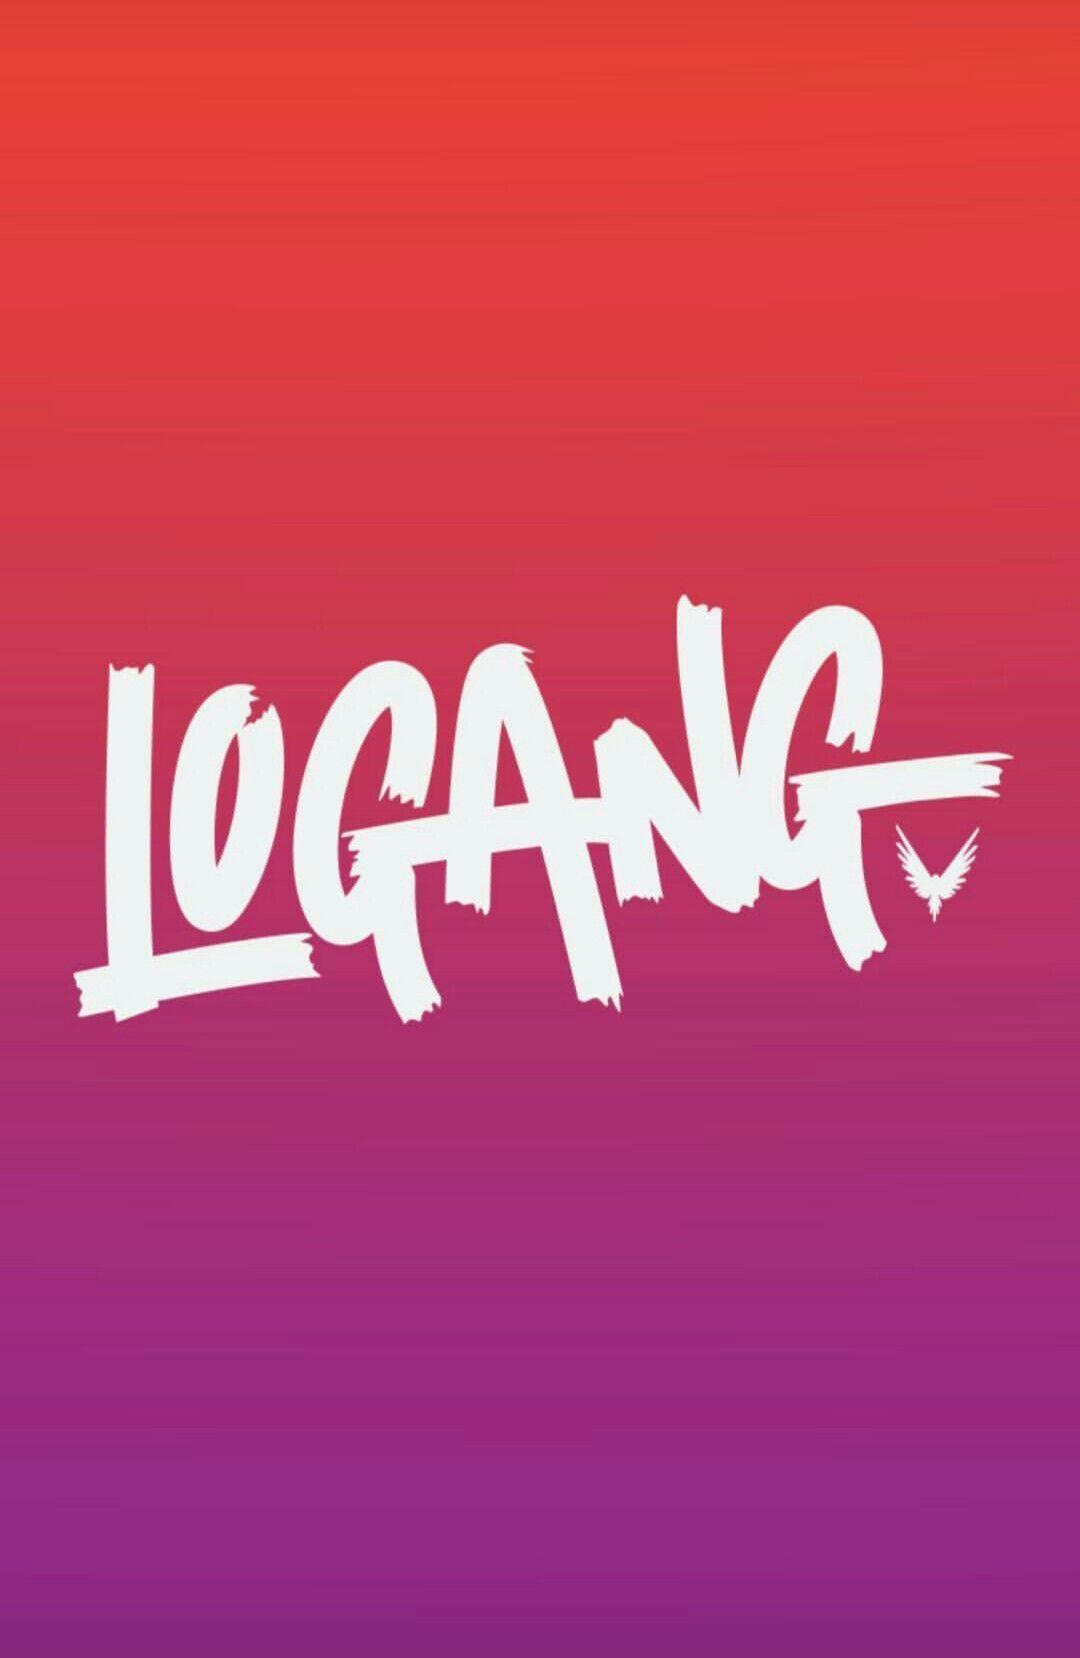 Calling all the logang #Screensaver #loganpaul. Logang. Logan paul, Logang wallpaper, Maverick logan paul